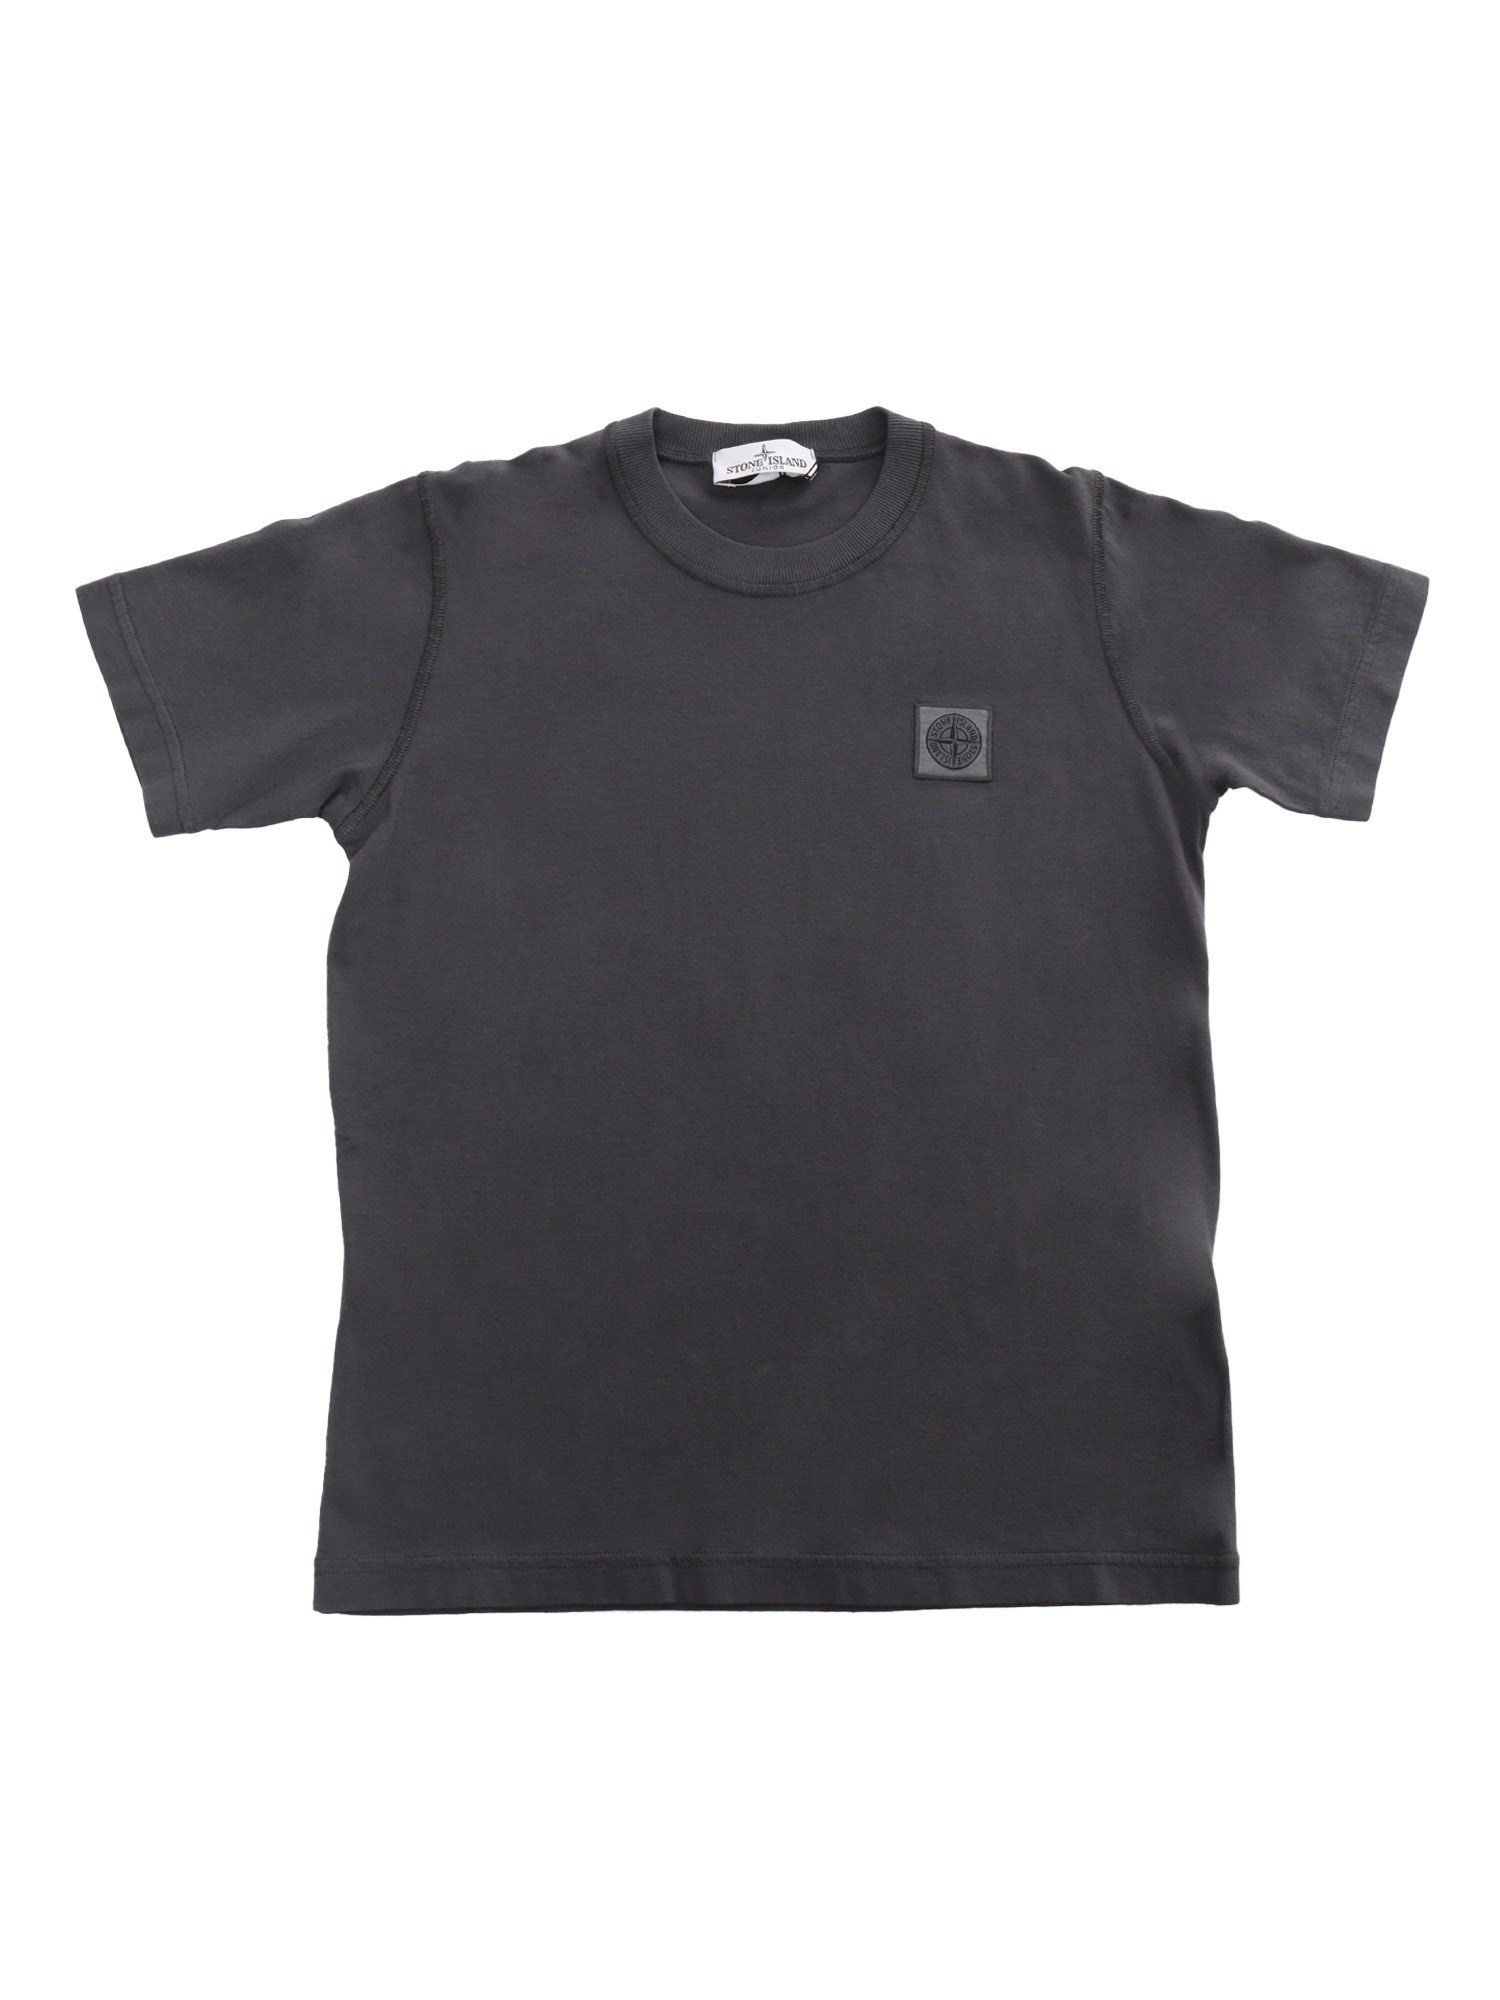 Stone Island Black T-shirt With Logo In Grey